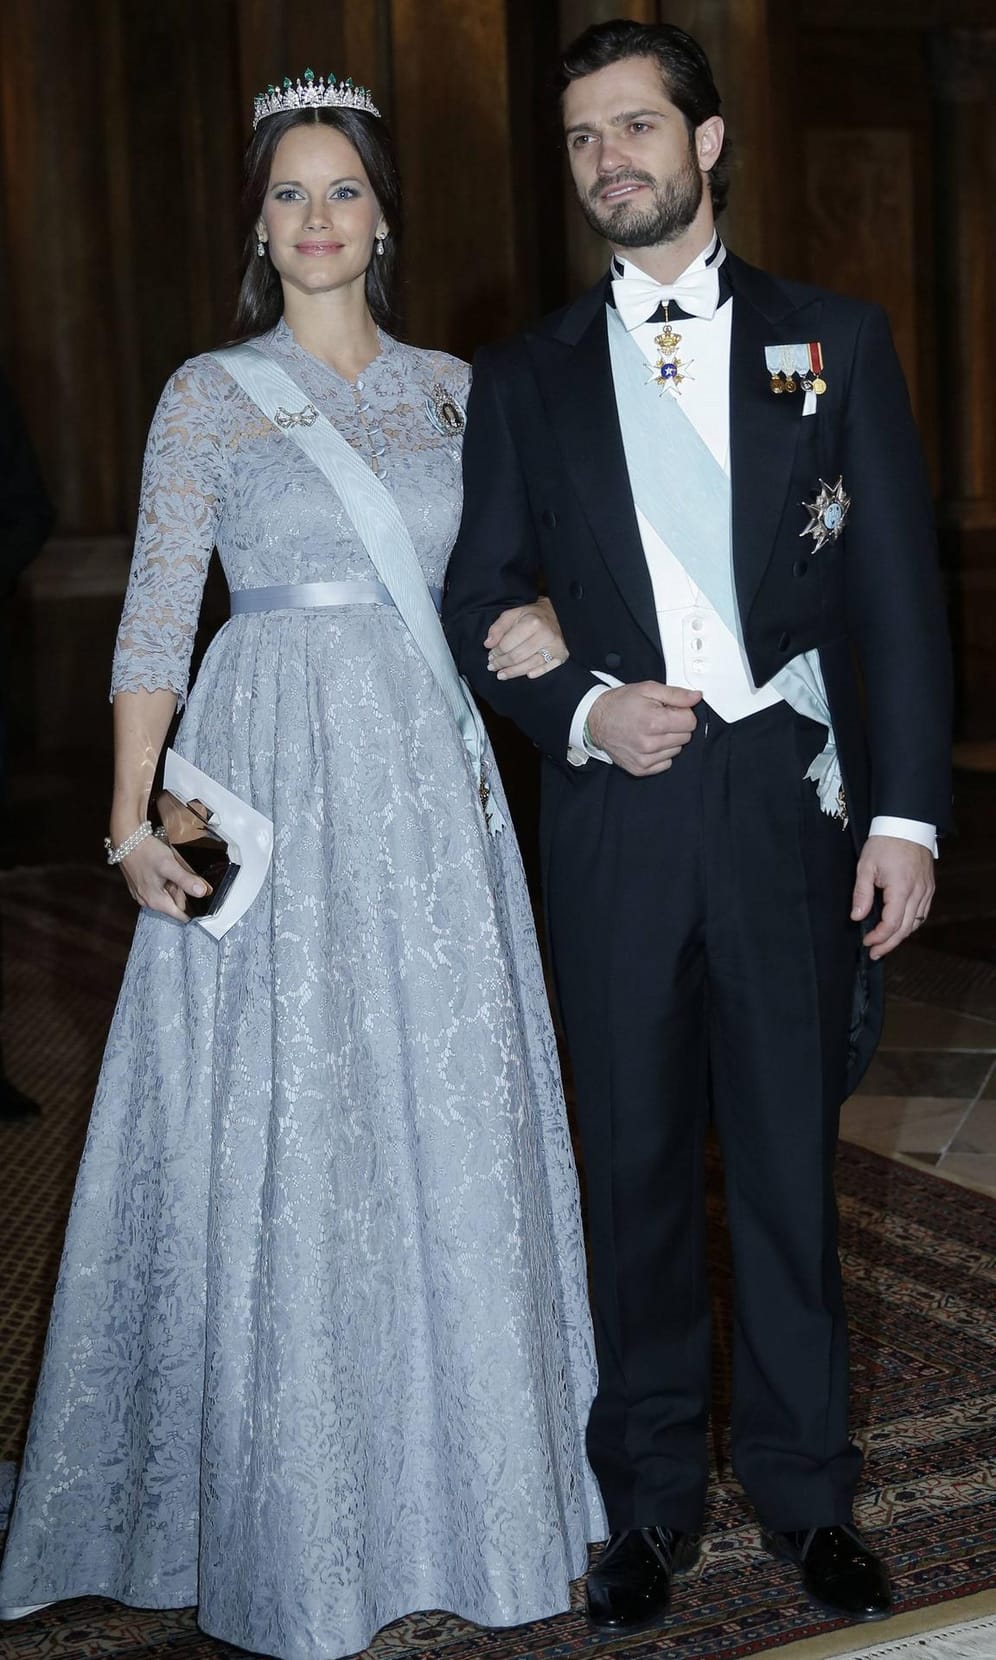 151211 STOCKHOLM Dec 11 2015 Sweden s Prince Carl Philip and his wife Princess Sofia atte